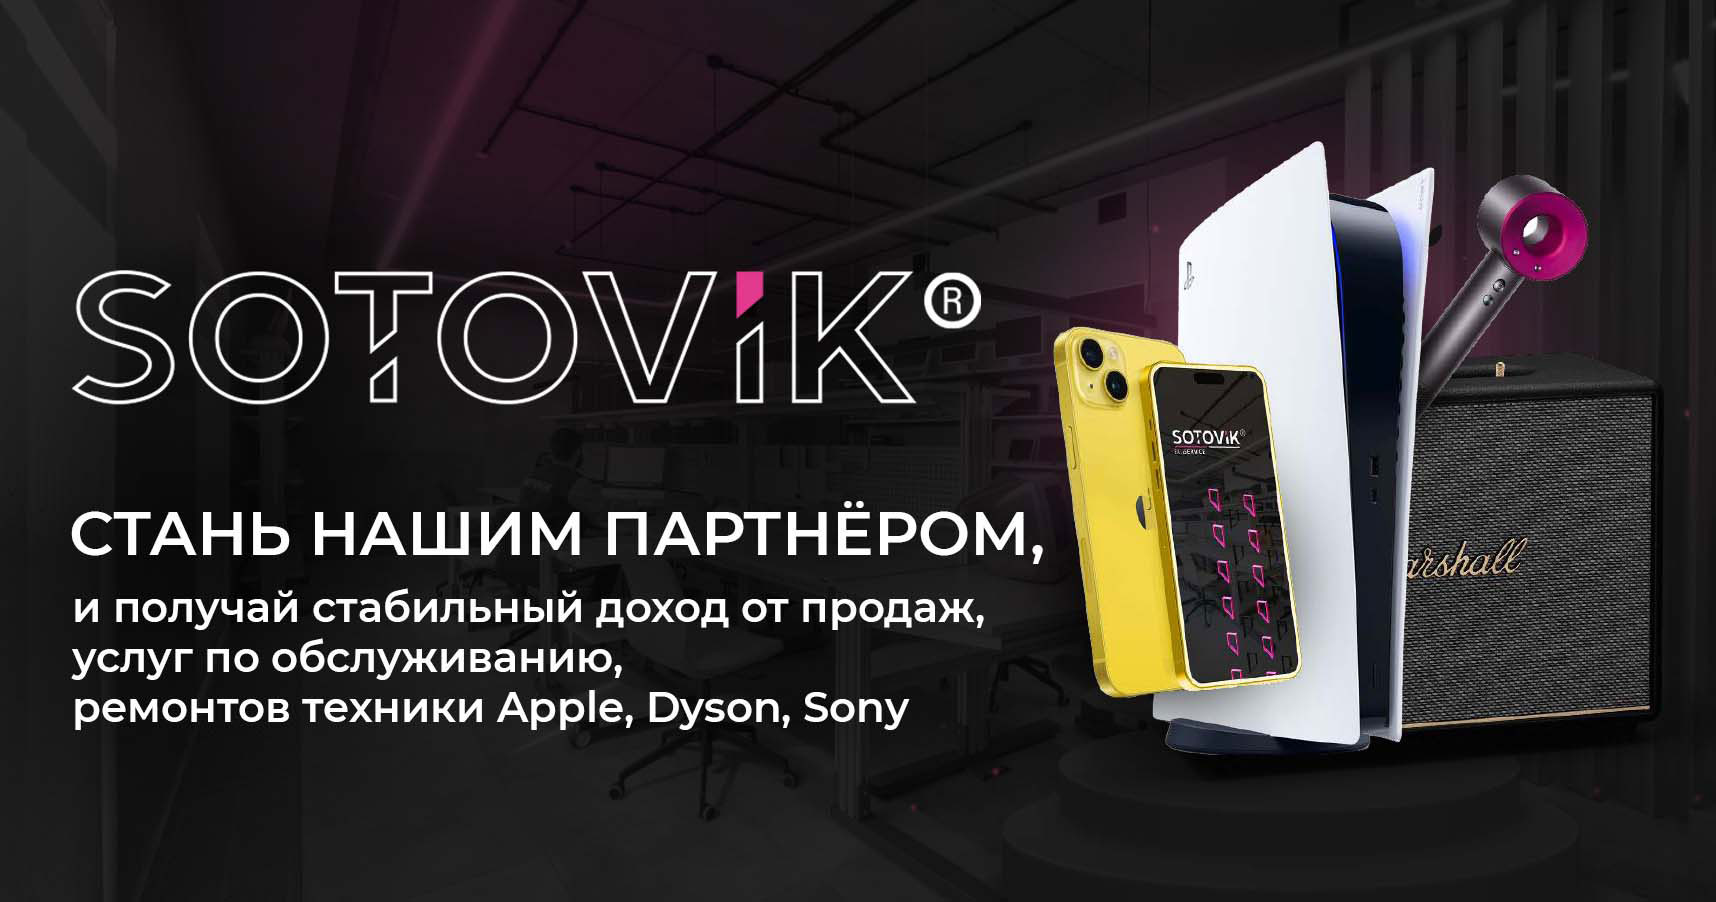 Франшиза сети магазинов электроники и аксессуаров SOTOVIK